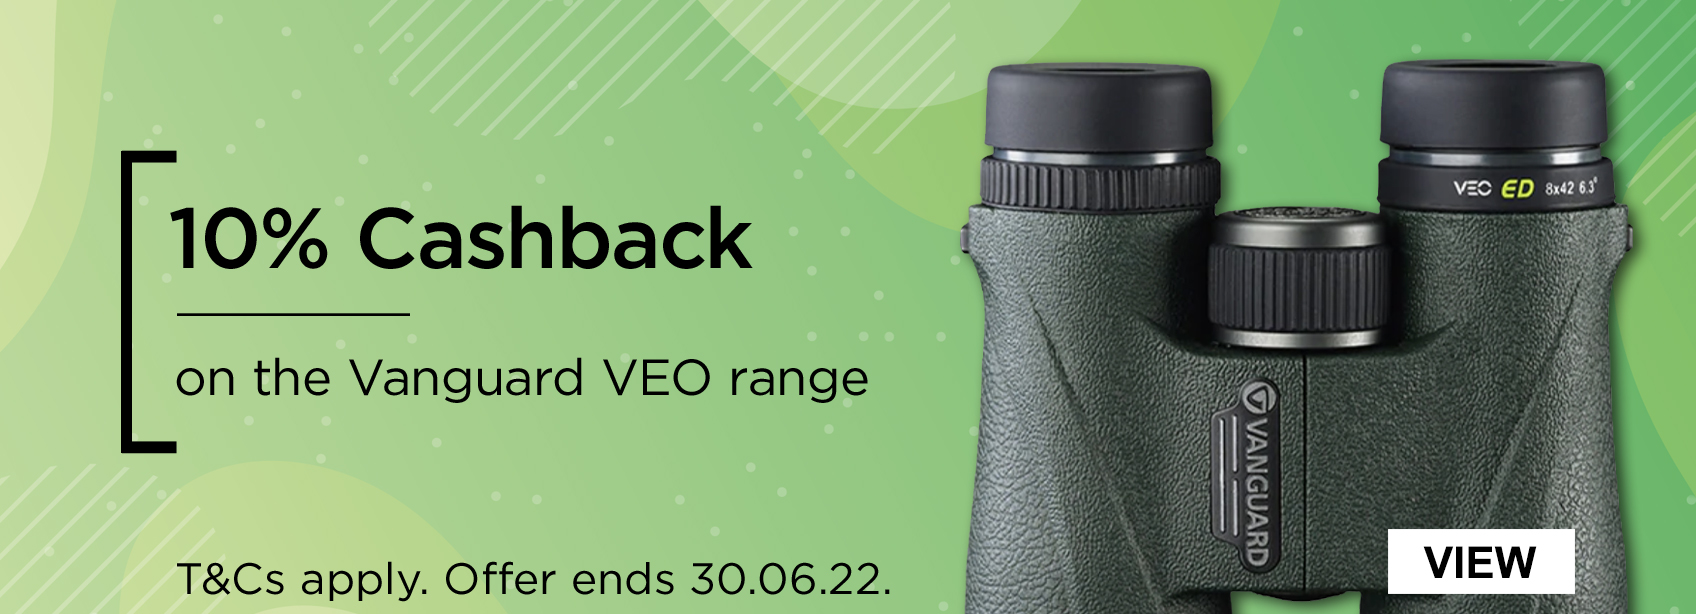 Spring Essentials | Binoculars | Vanguard Cashbacks